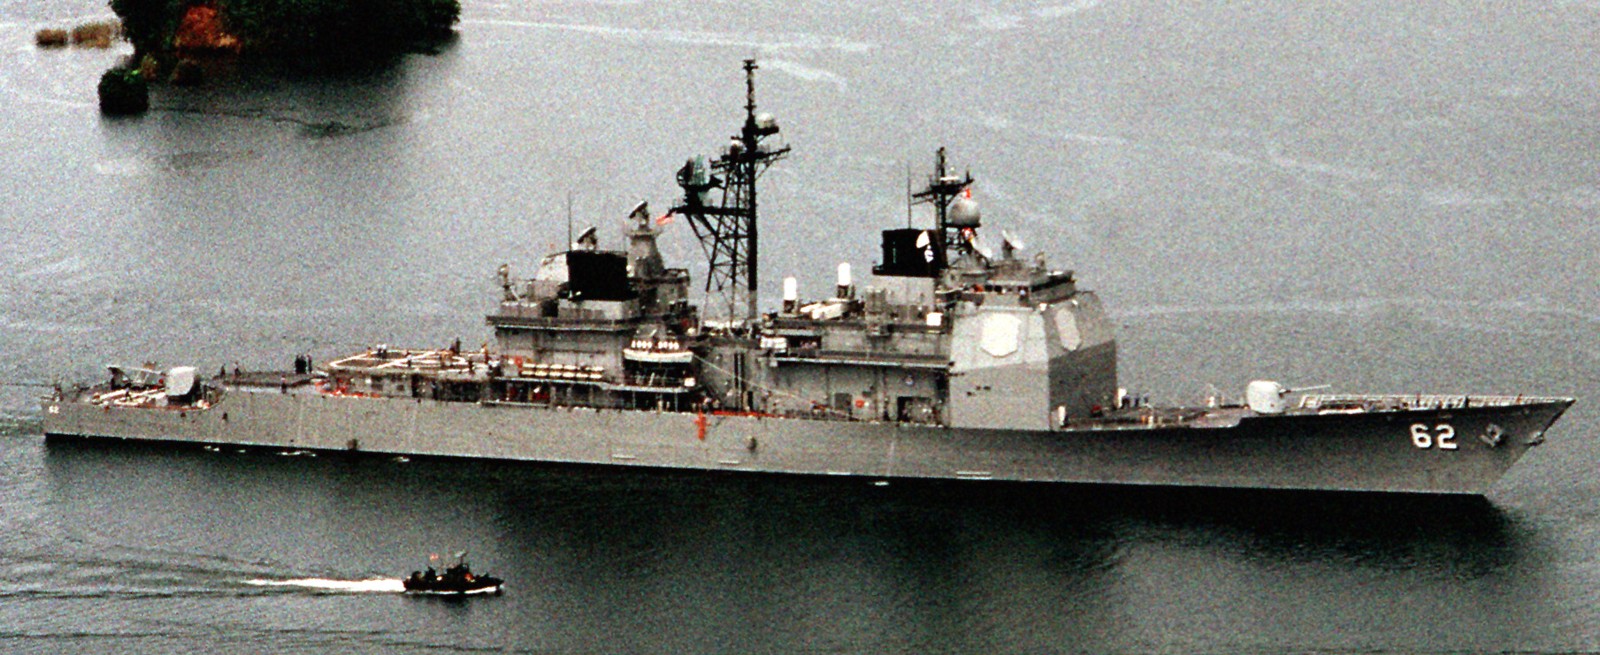 cg-62 uss chancellorsville ticonderoga class guided missile cruiser aegis us navy 125